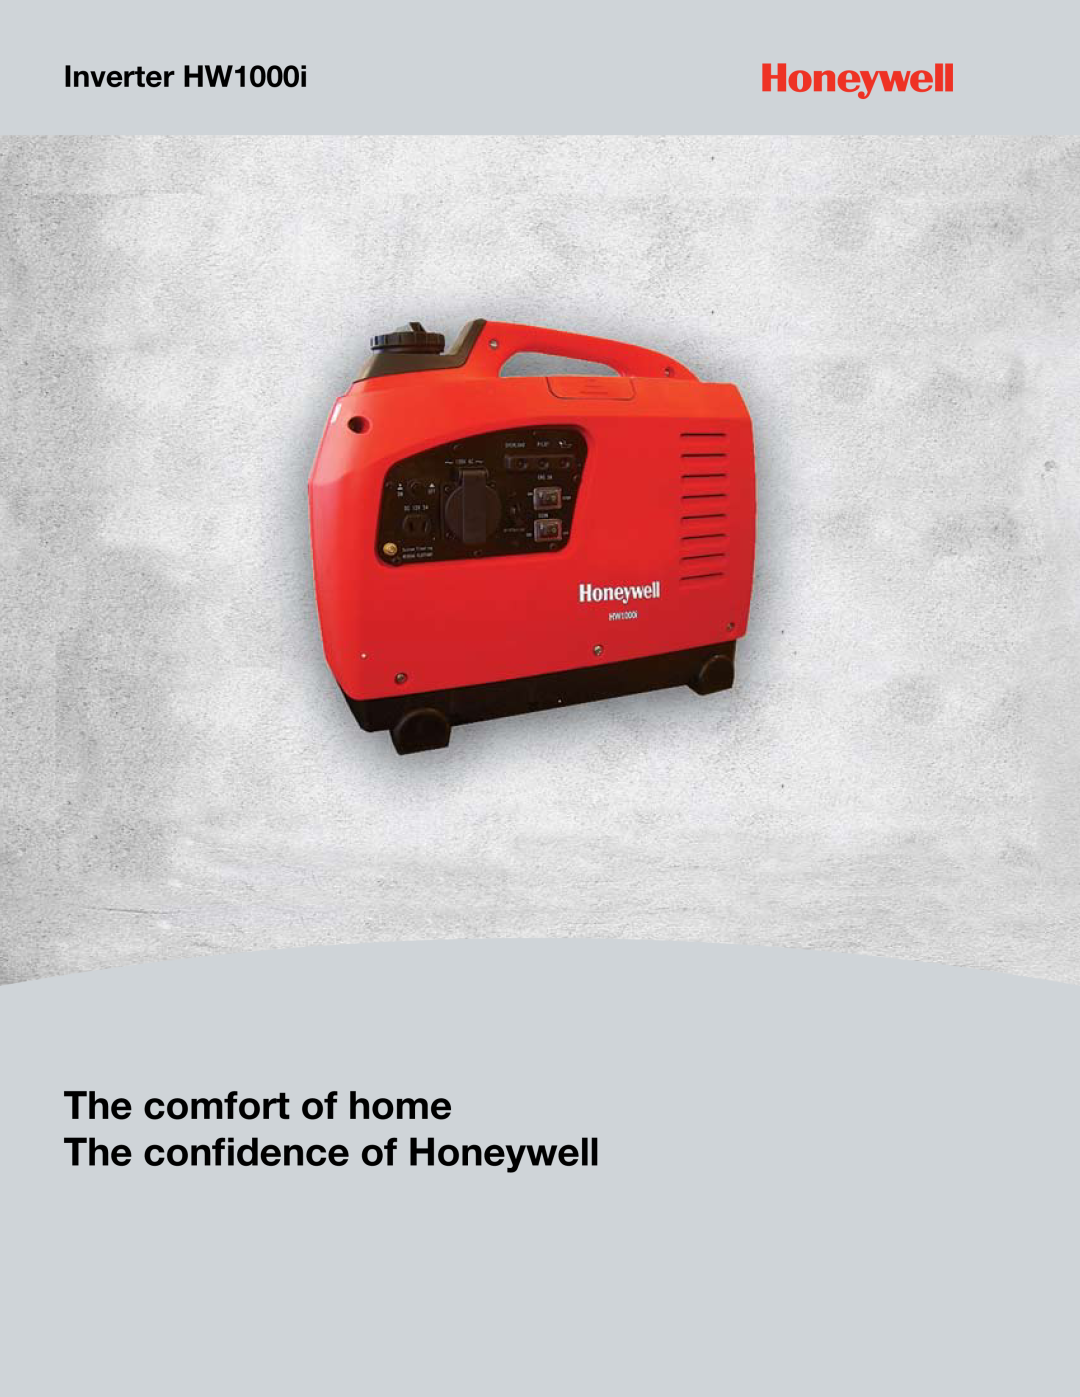 Honeywell manual Inverter HW1000i, The comfort of home The confidence of Honeywell 